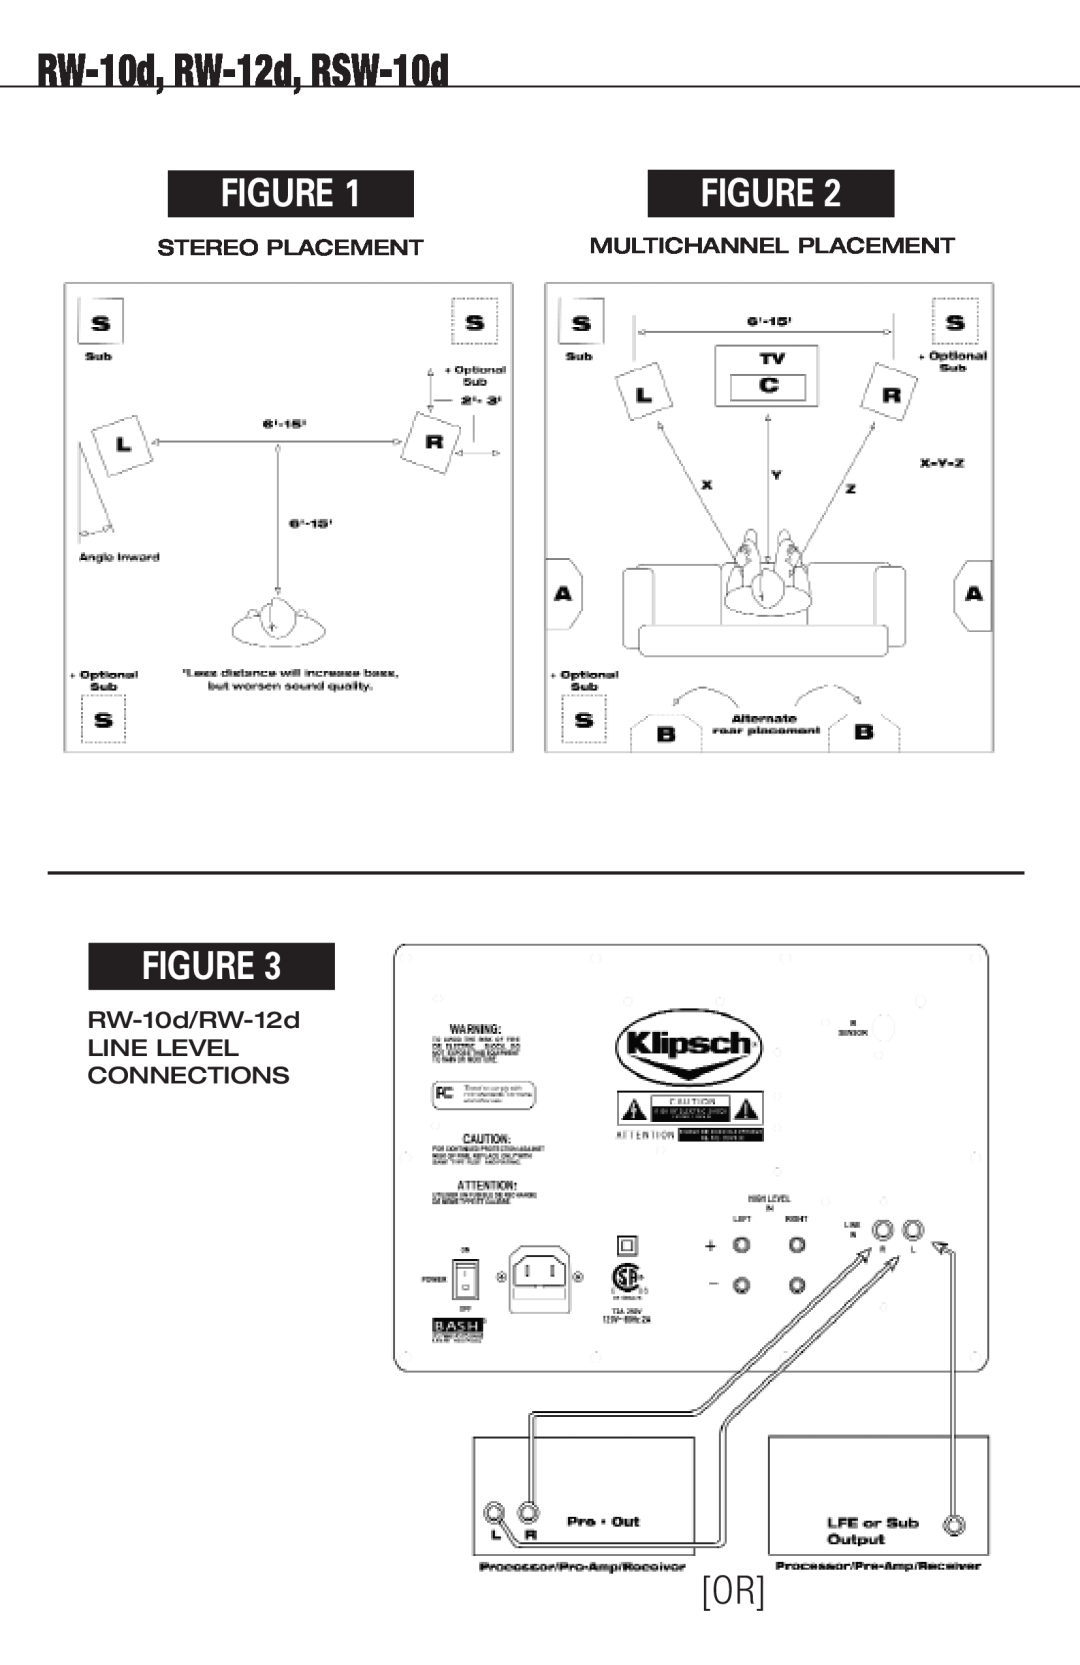 Klipsch manual Stereo Placement, Multichannel Placement, RW-10d/RW-12d LINE LEVEL CONNECTIONS, RW-10d, RW-12d, RSW-10d 